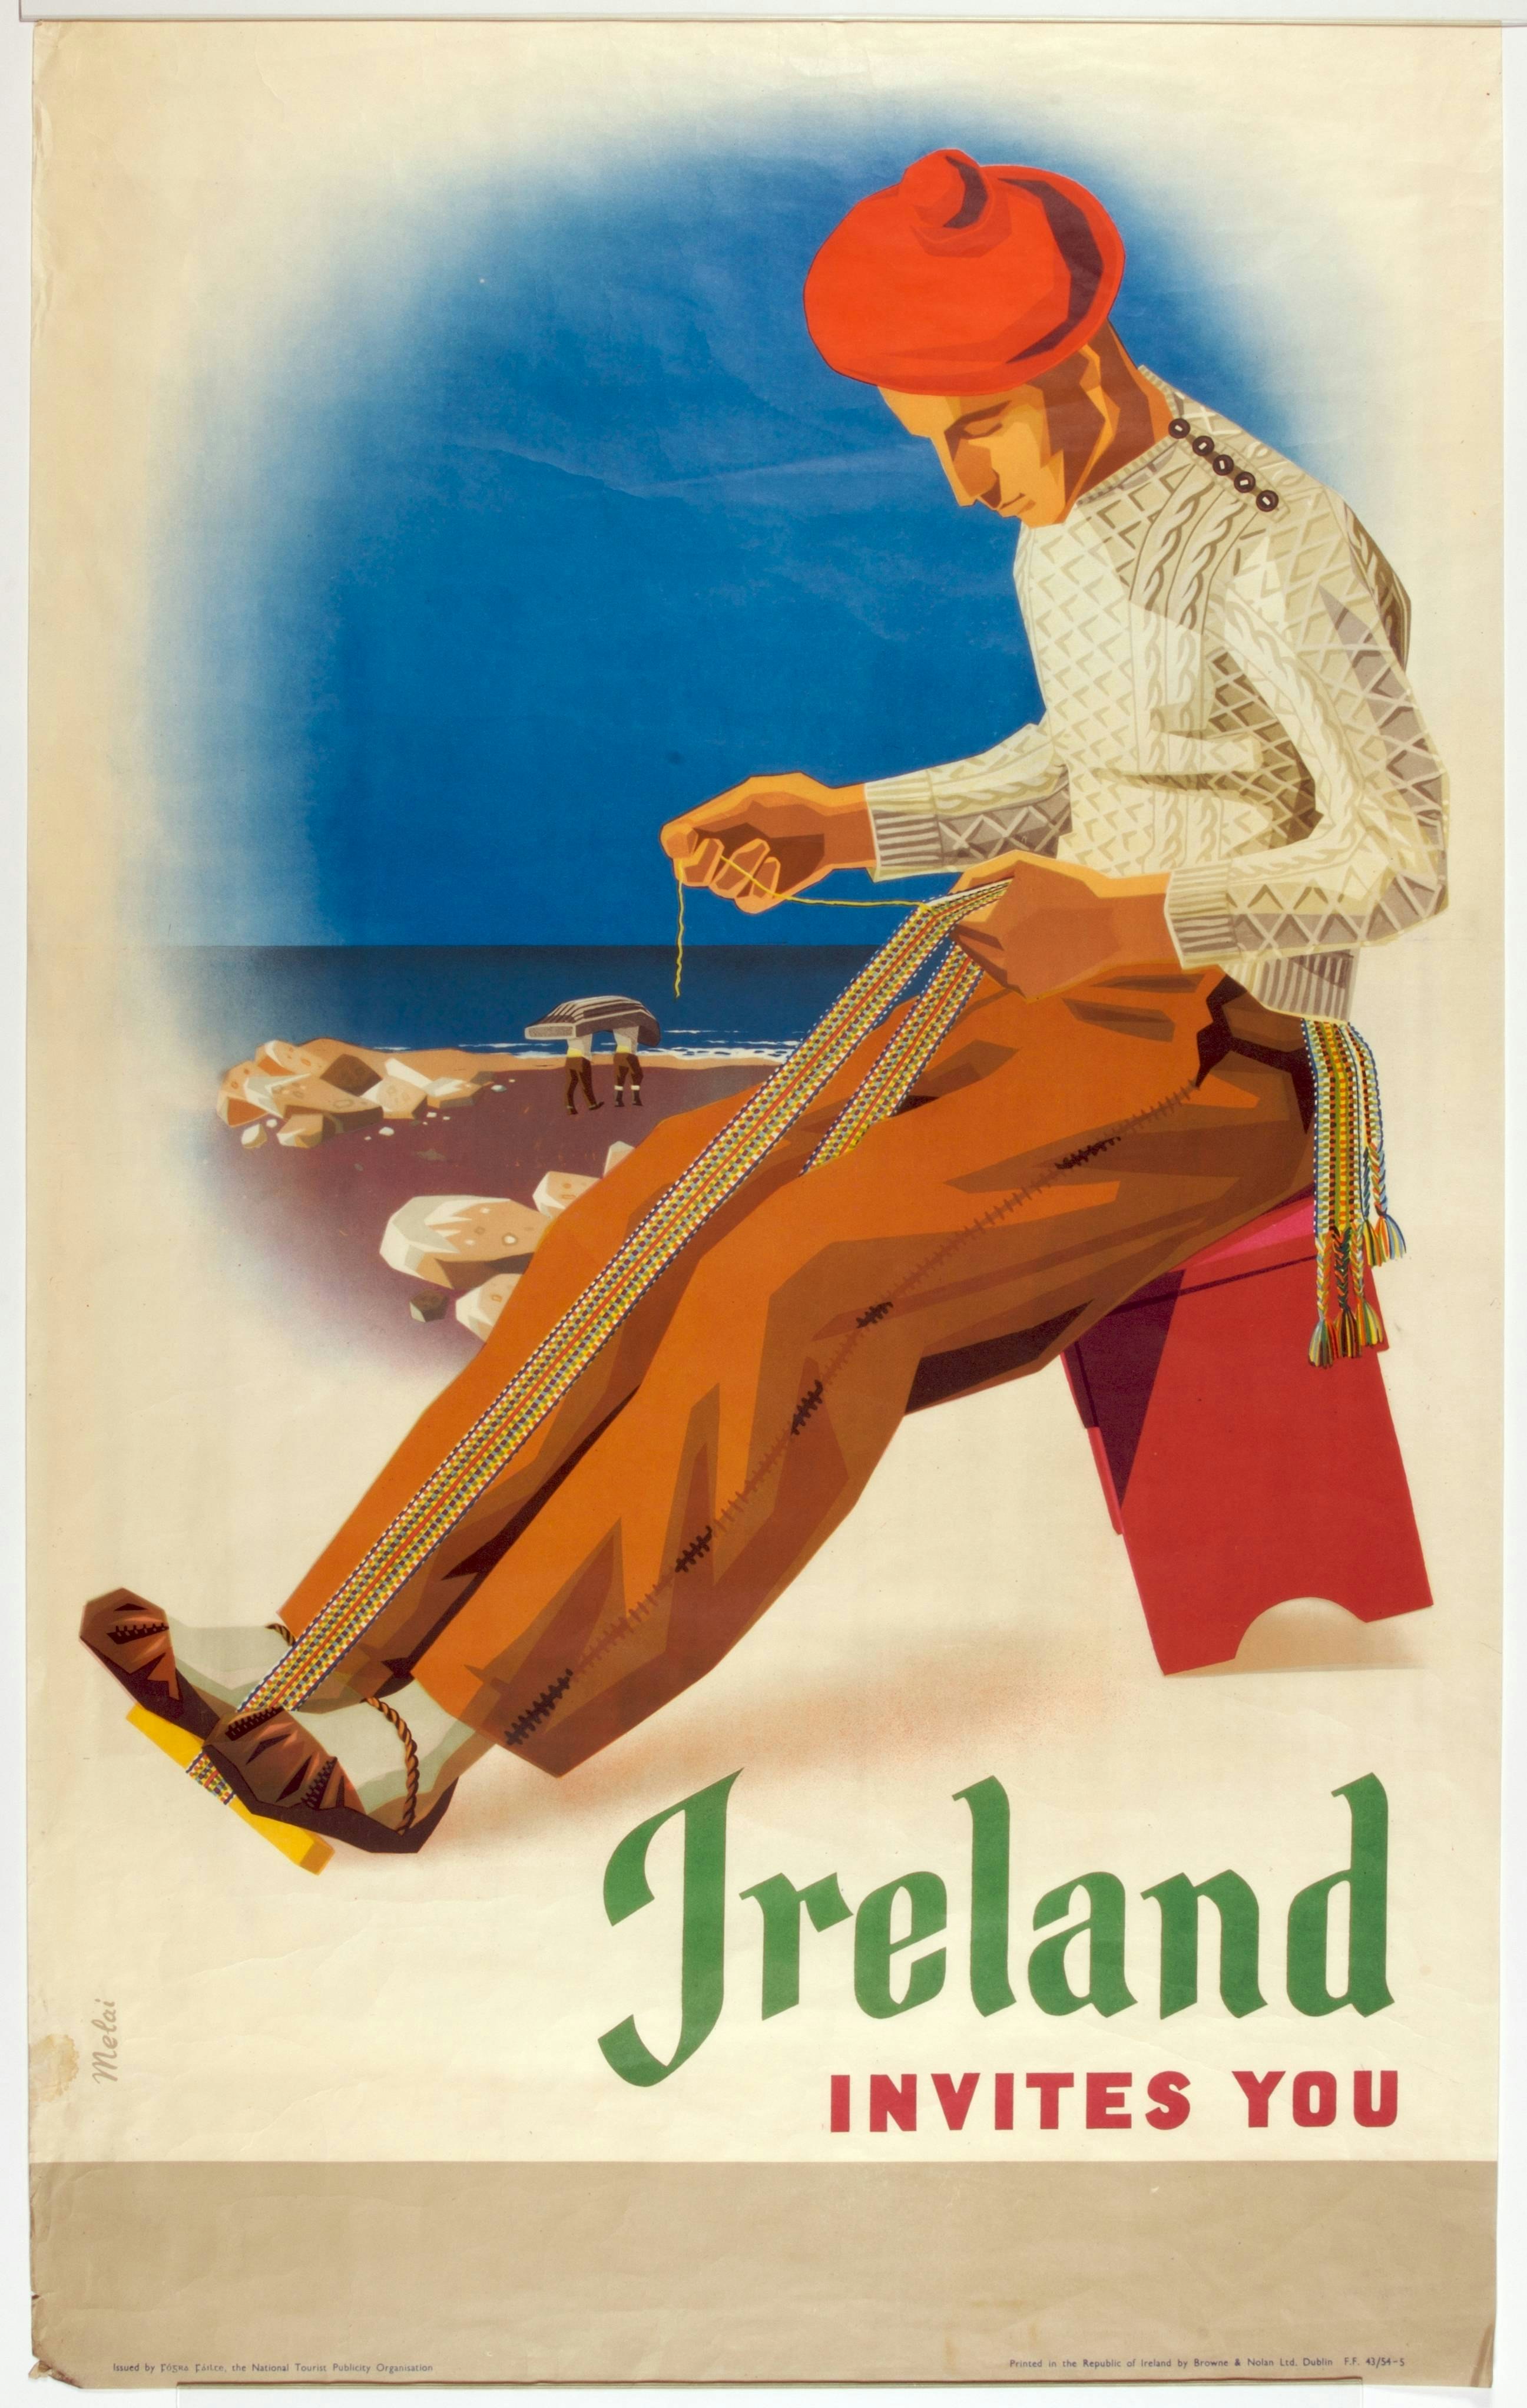 Travel News - Ireland Invites You